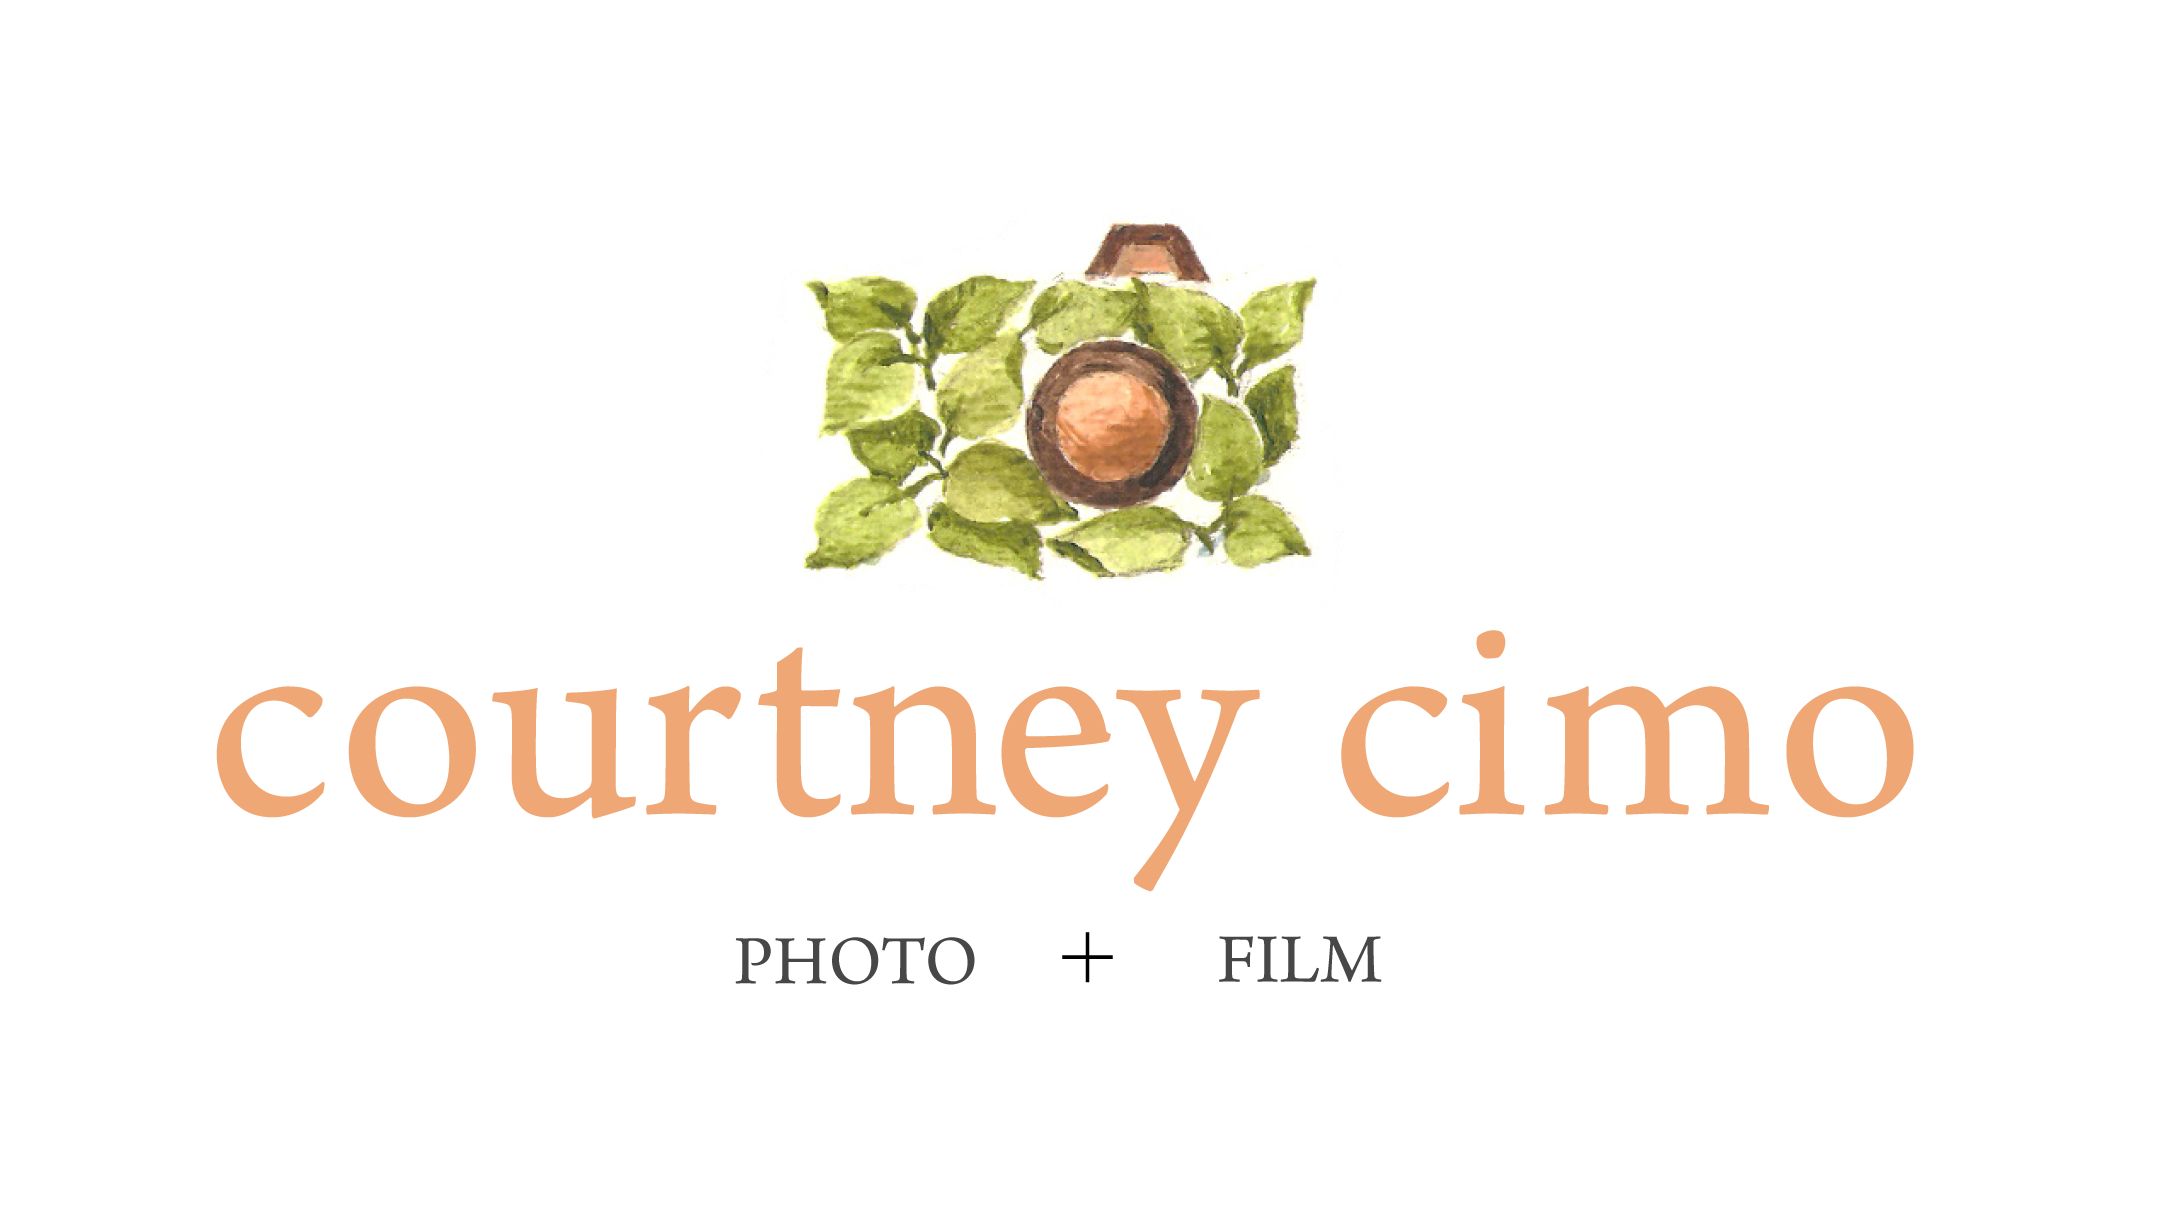 courtney cimo photo + film